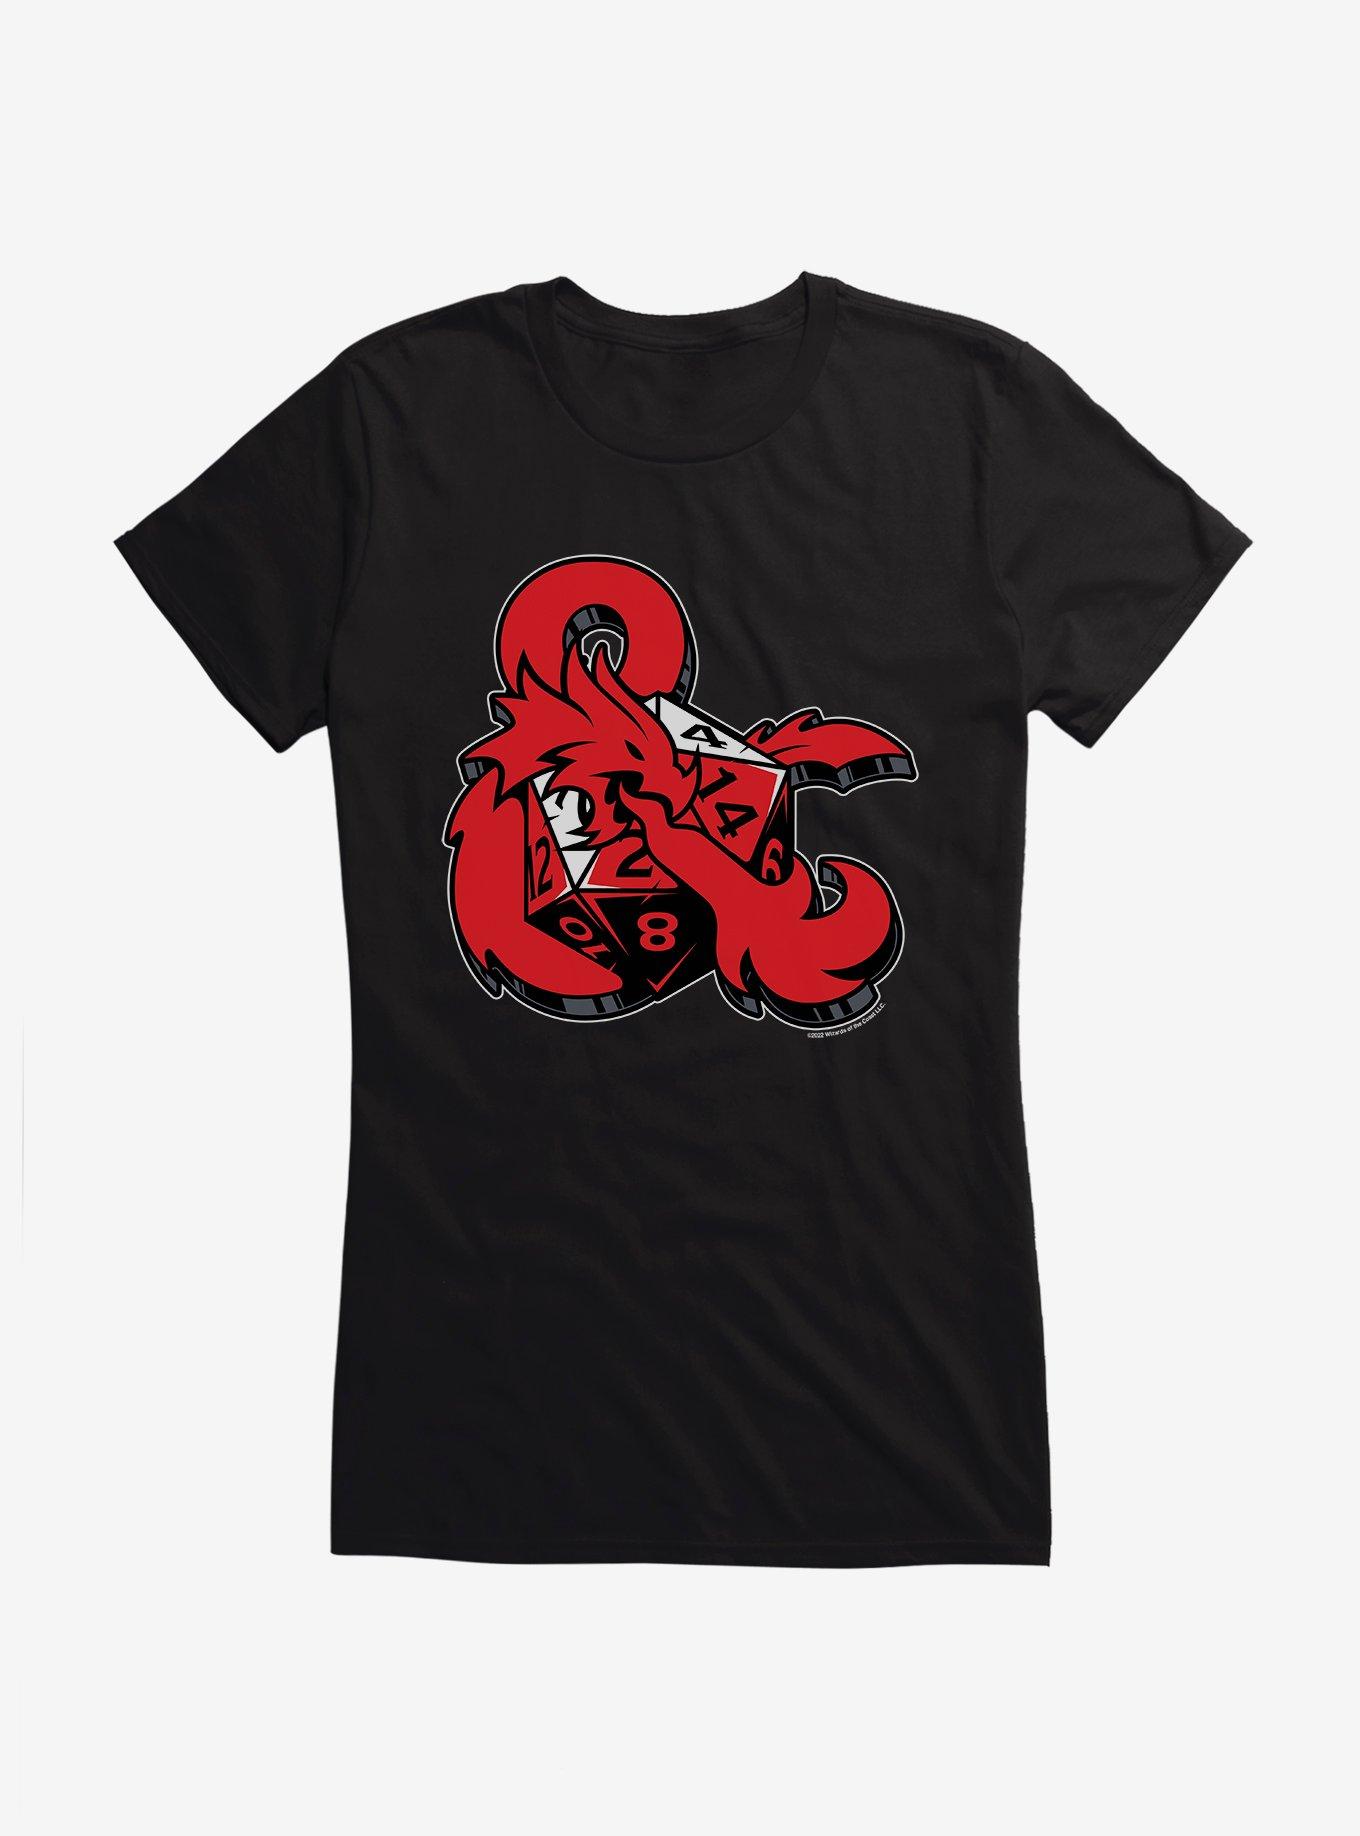 Dungeons & Dragons Ampersand Dice Girls T-Shirt